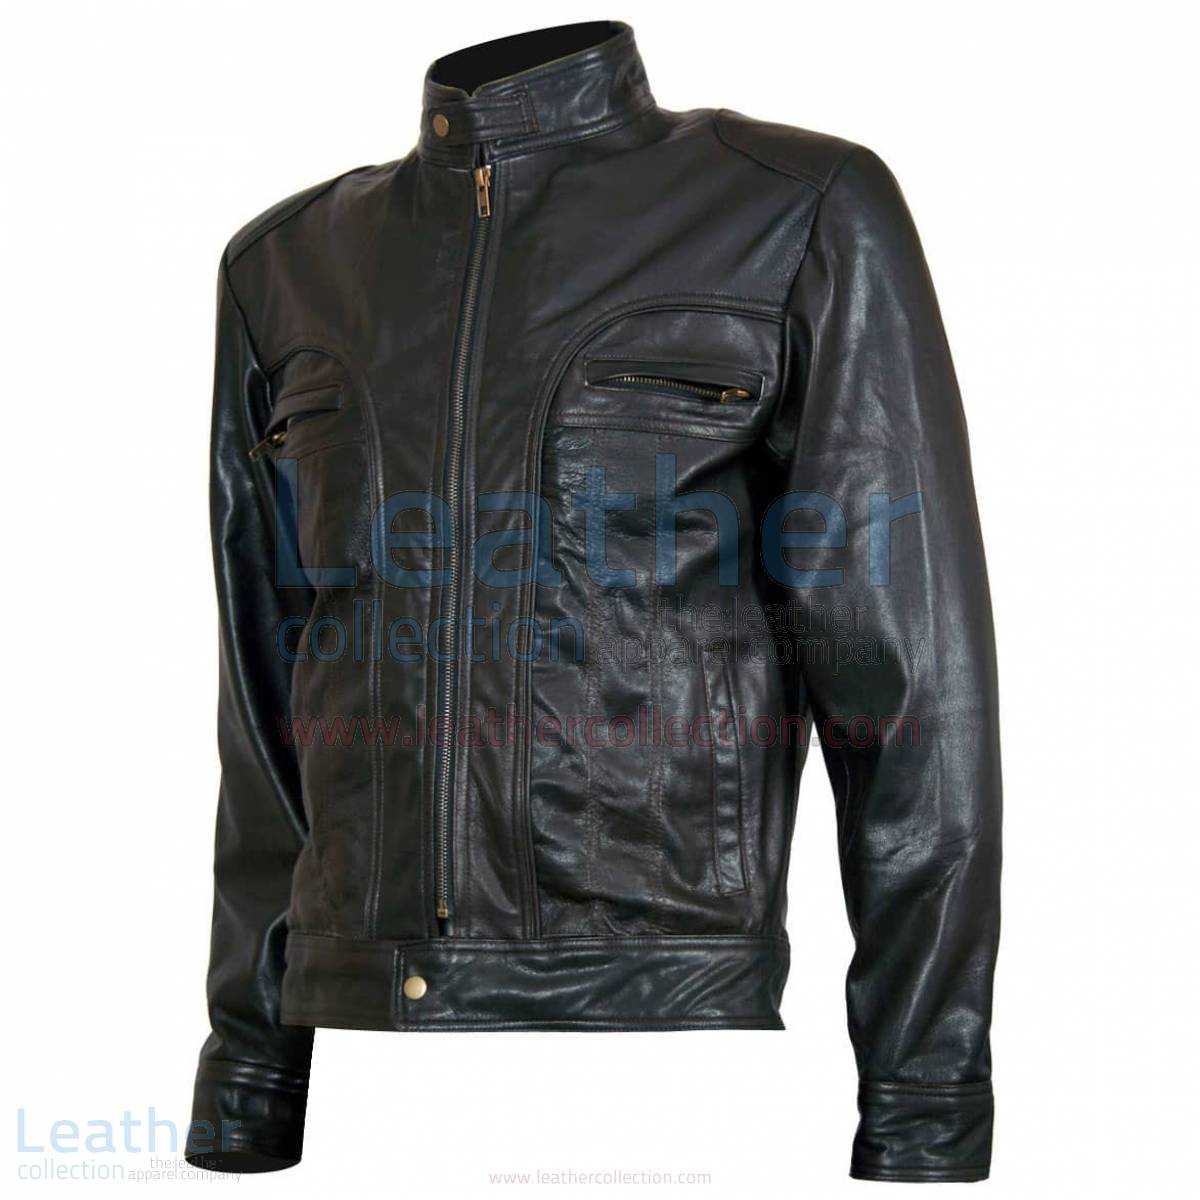 Ghosts of Girlfriends Past “Matthew” Leather Jacket –  Jacket